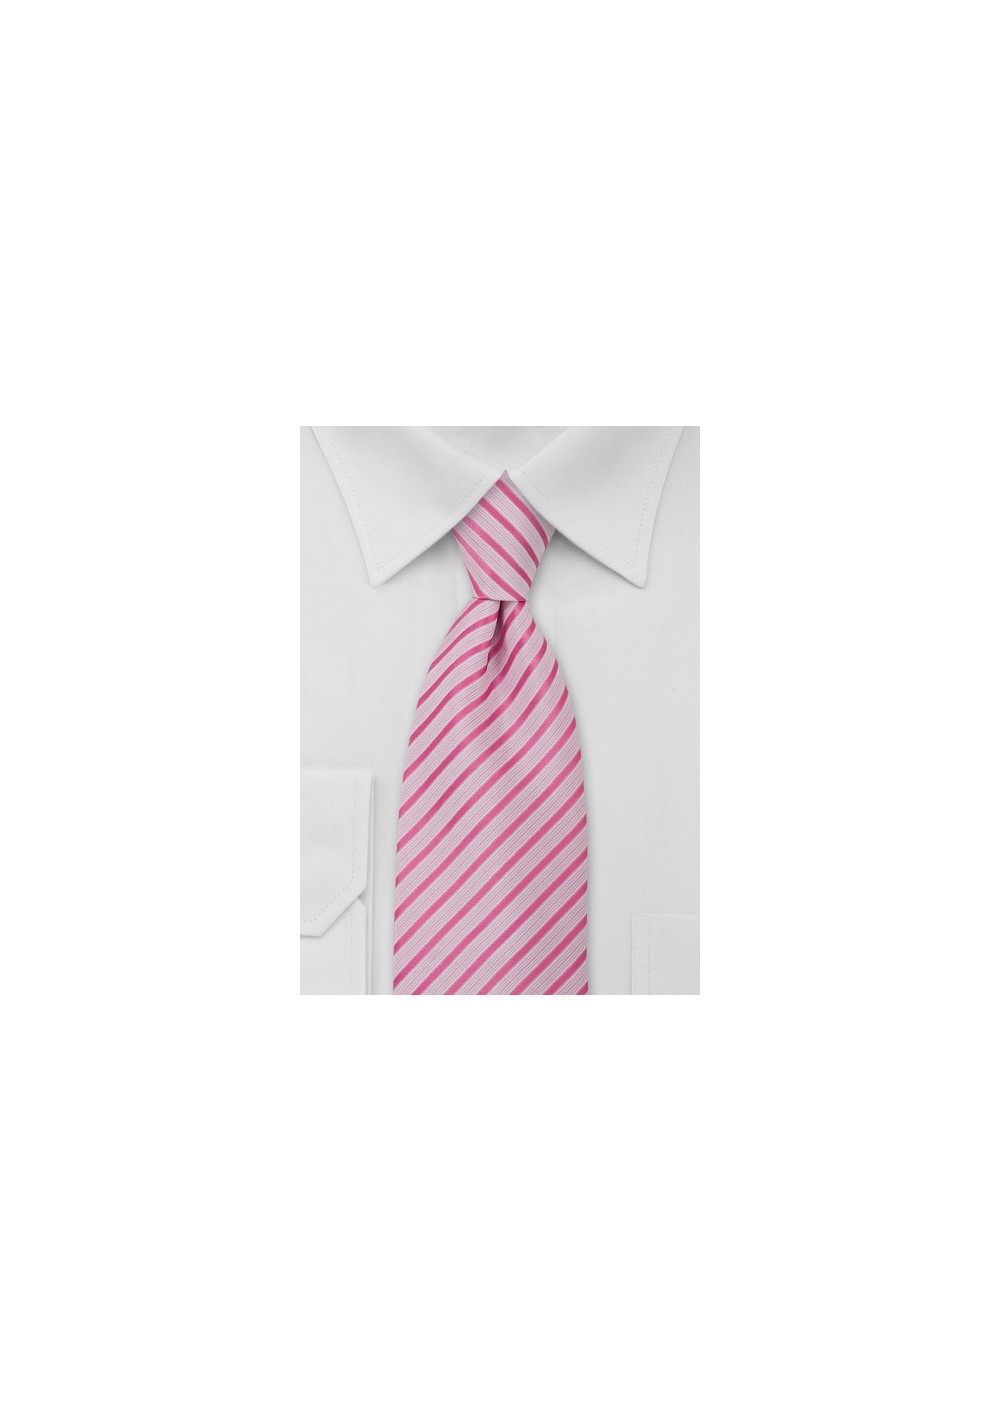 Striped Tie Hot Pink White